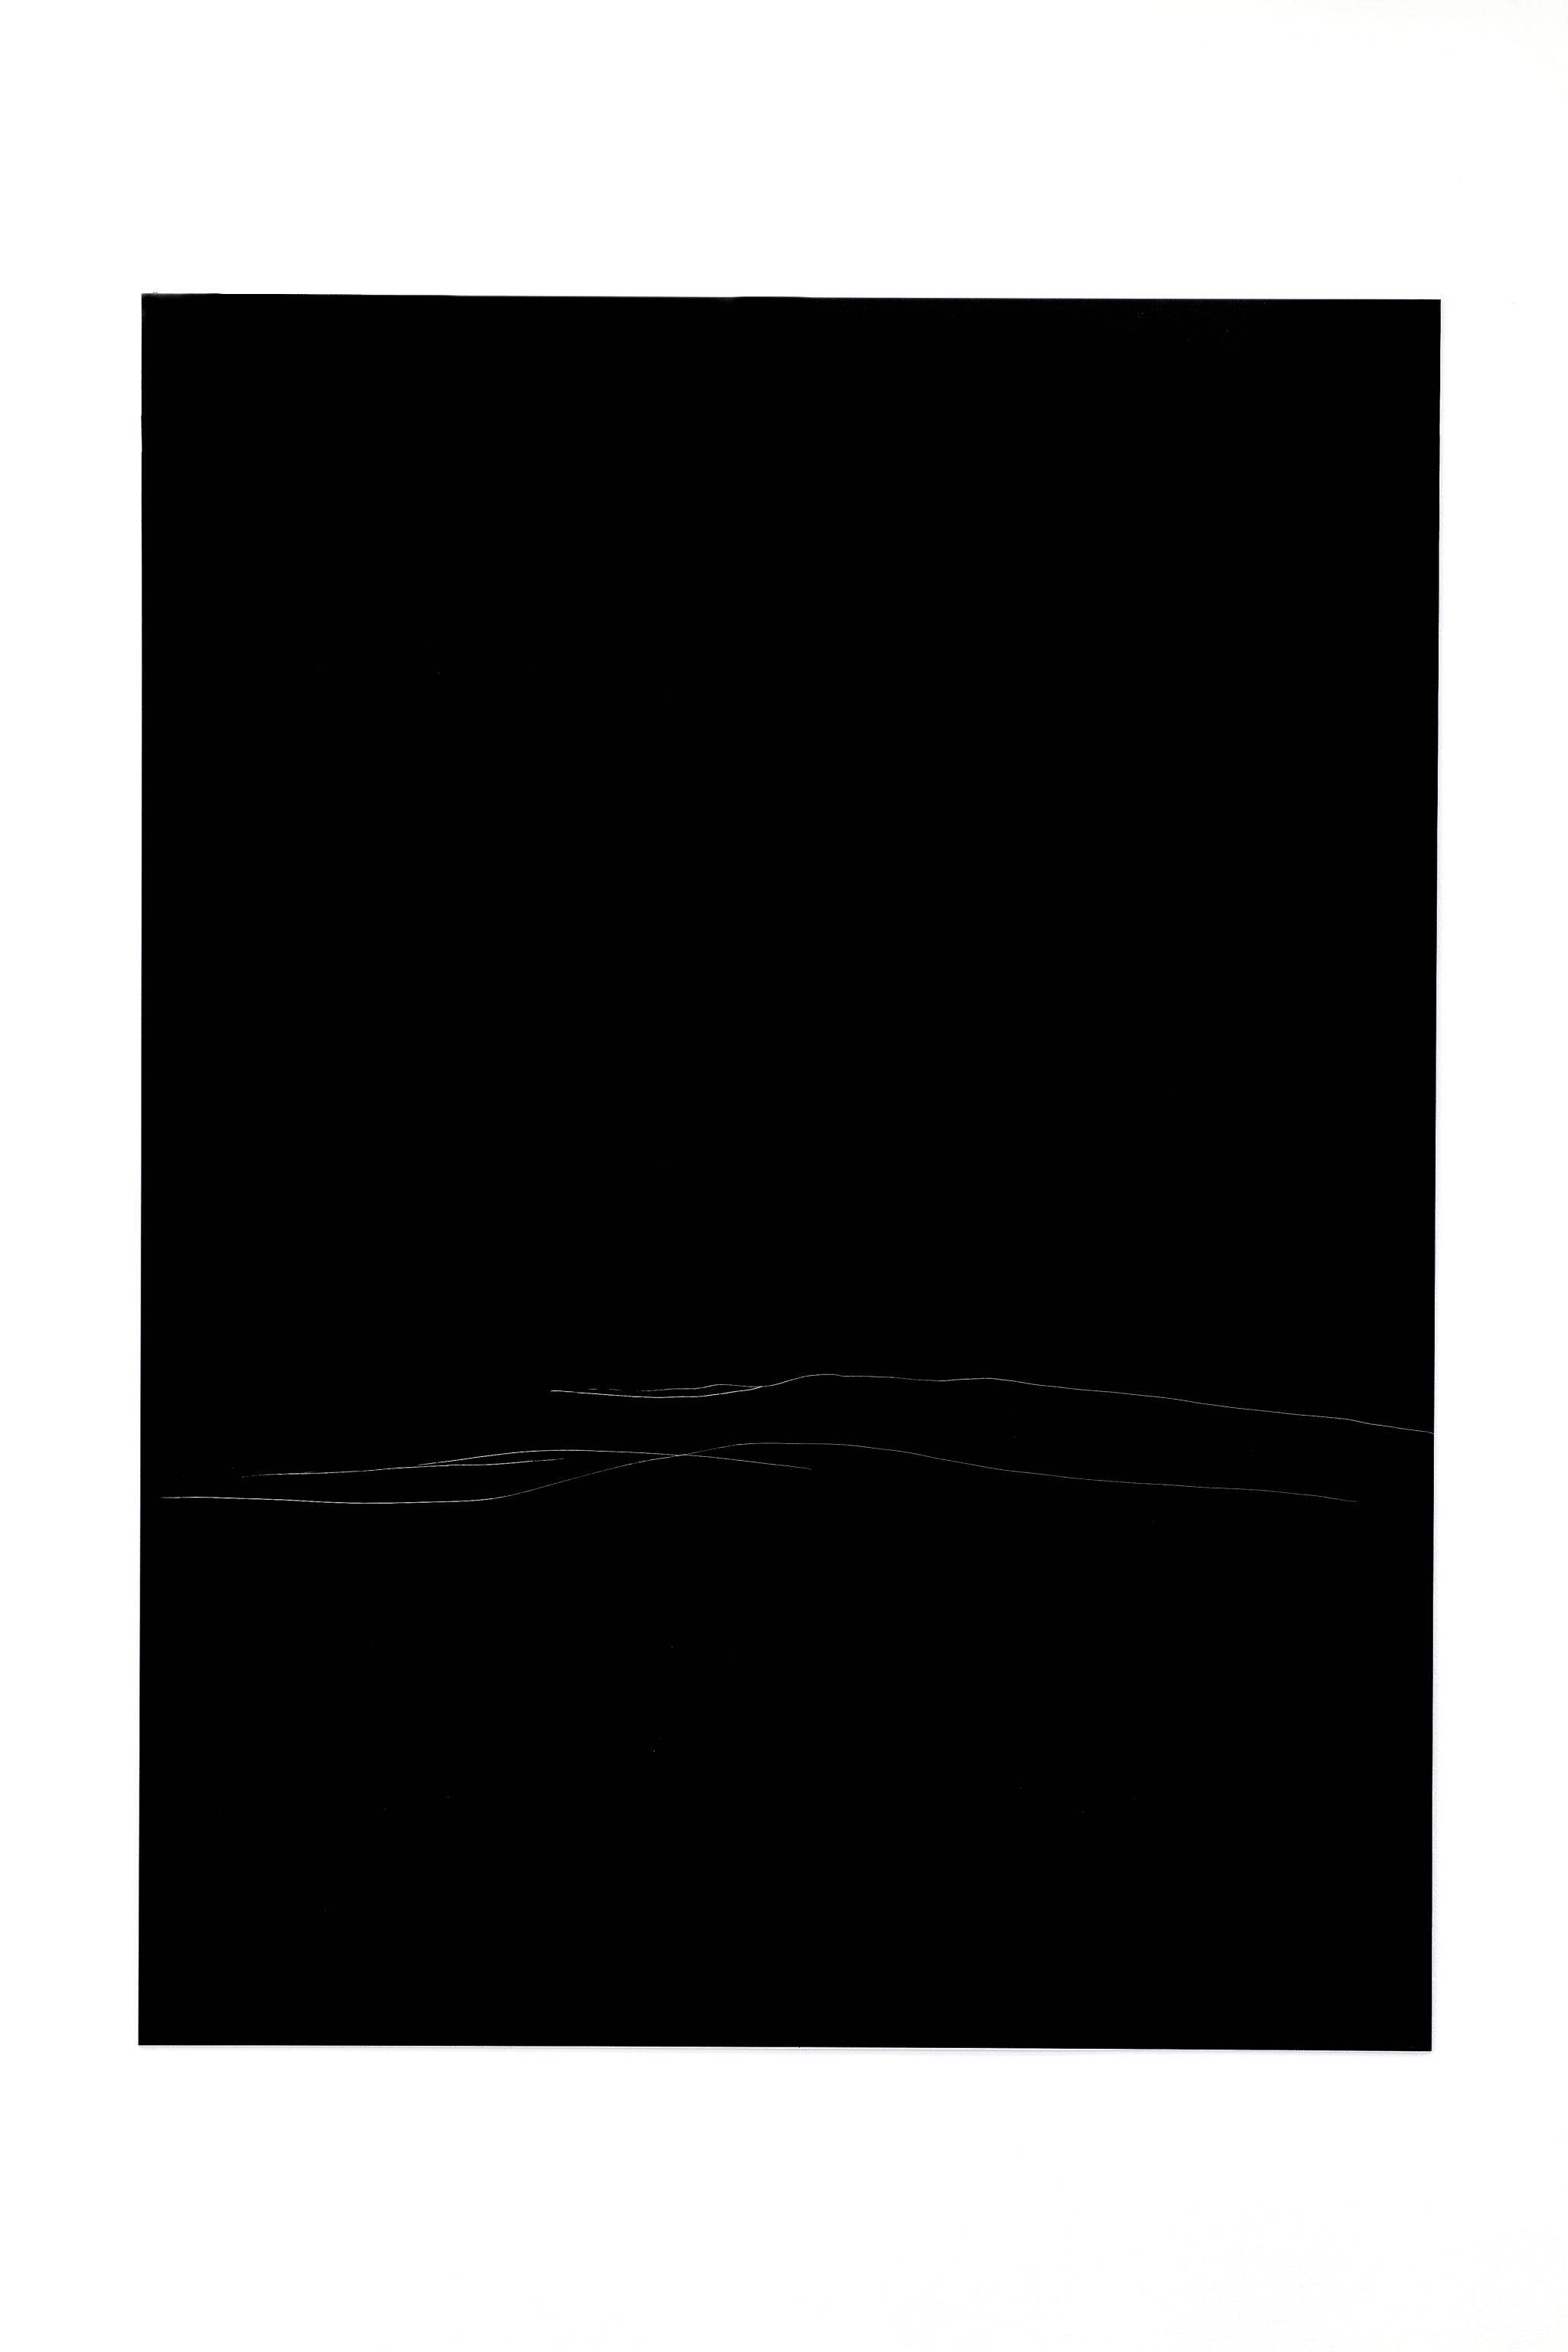 Anne Imhof, Horizont III, 2014, Black dibond, etching, 135 ⁠× ⁠100 ⁠⁠cm